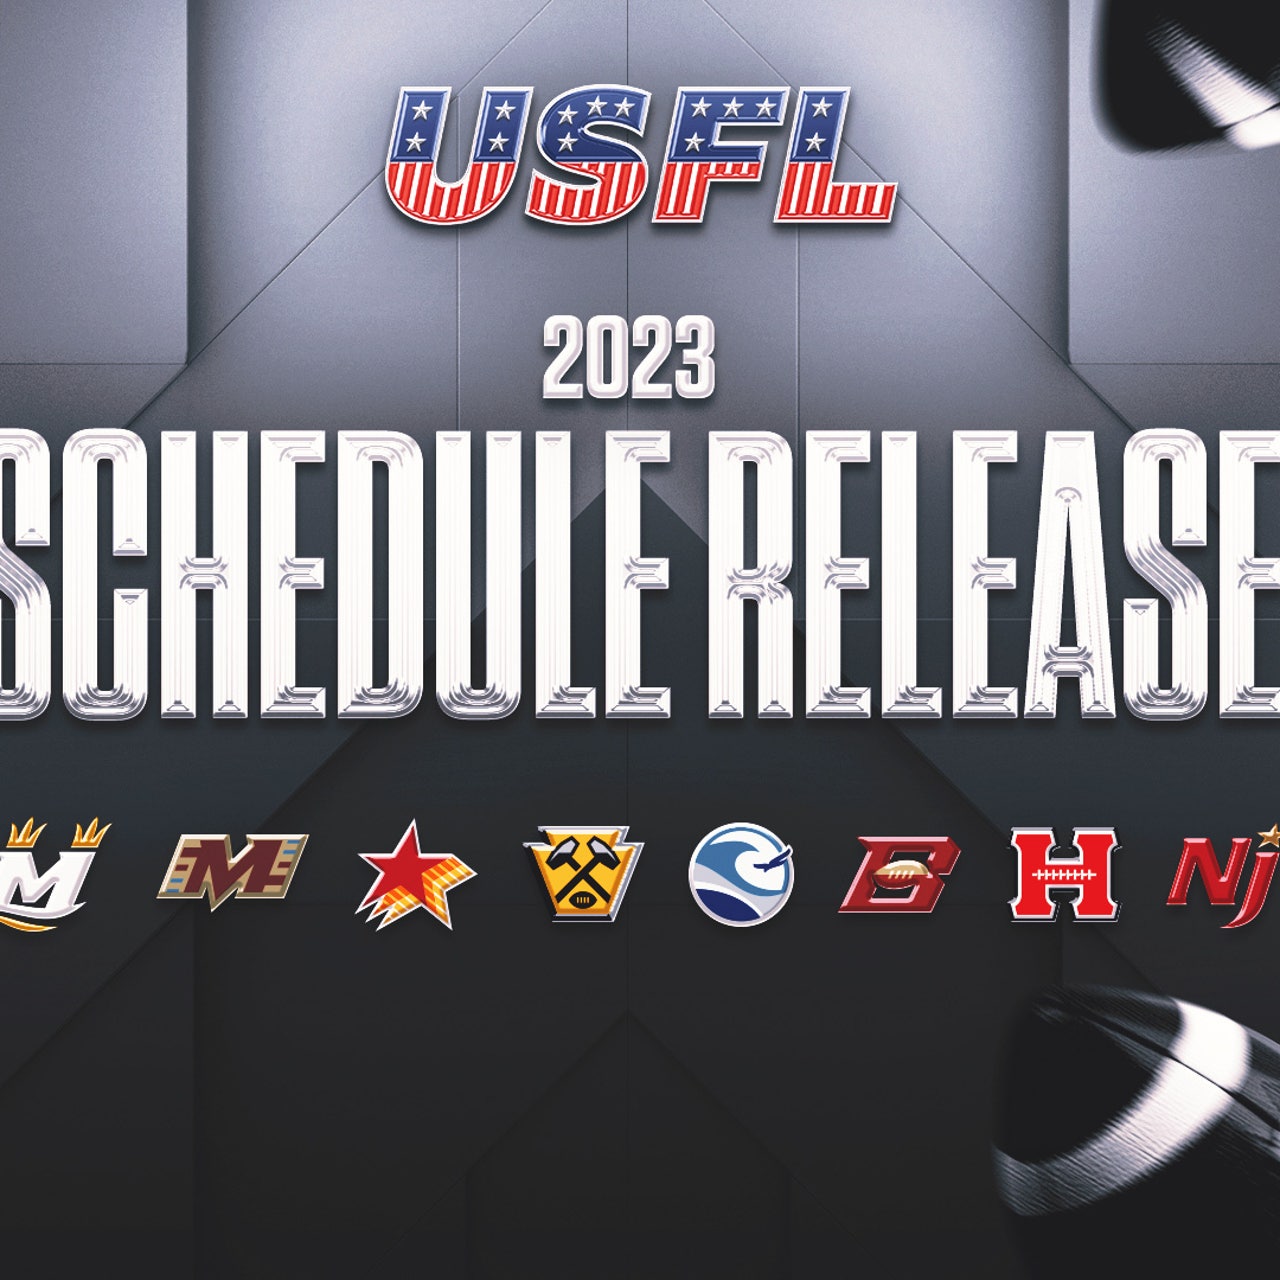 NJ Devils schedule 2022-2023 schedule released: See all dates